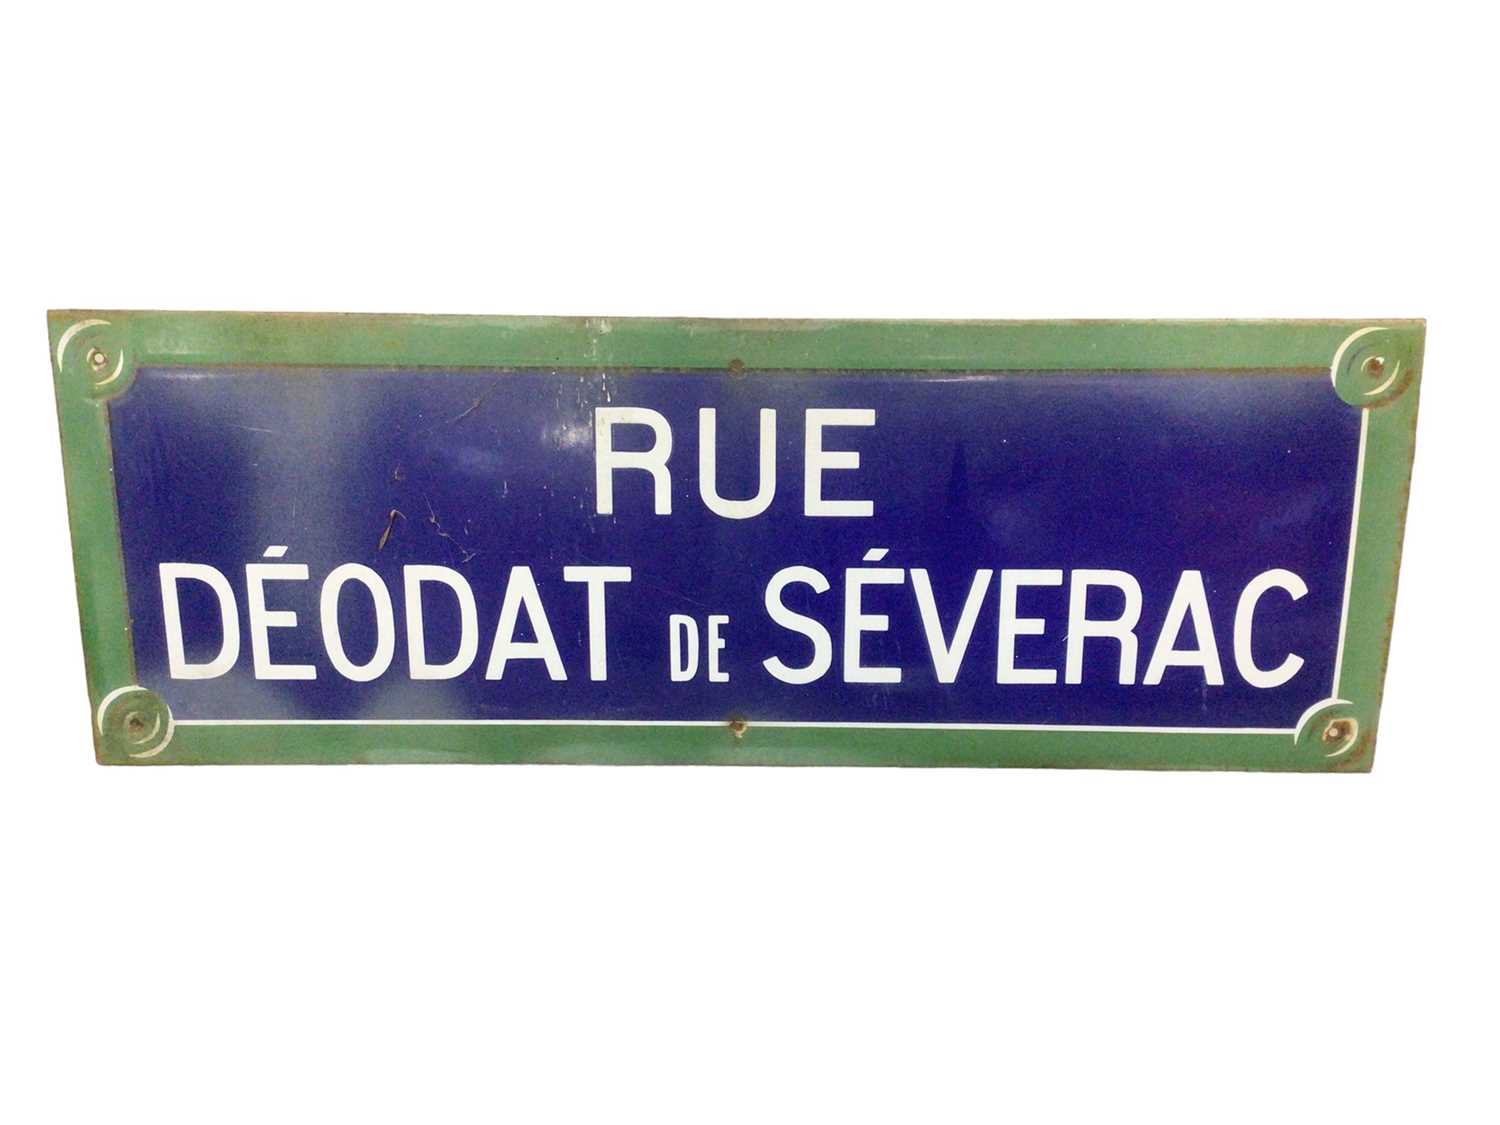 Lot 60 - Original French enamel street sign - 'Rue Deodat de Severac' - 100cm x 35cm